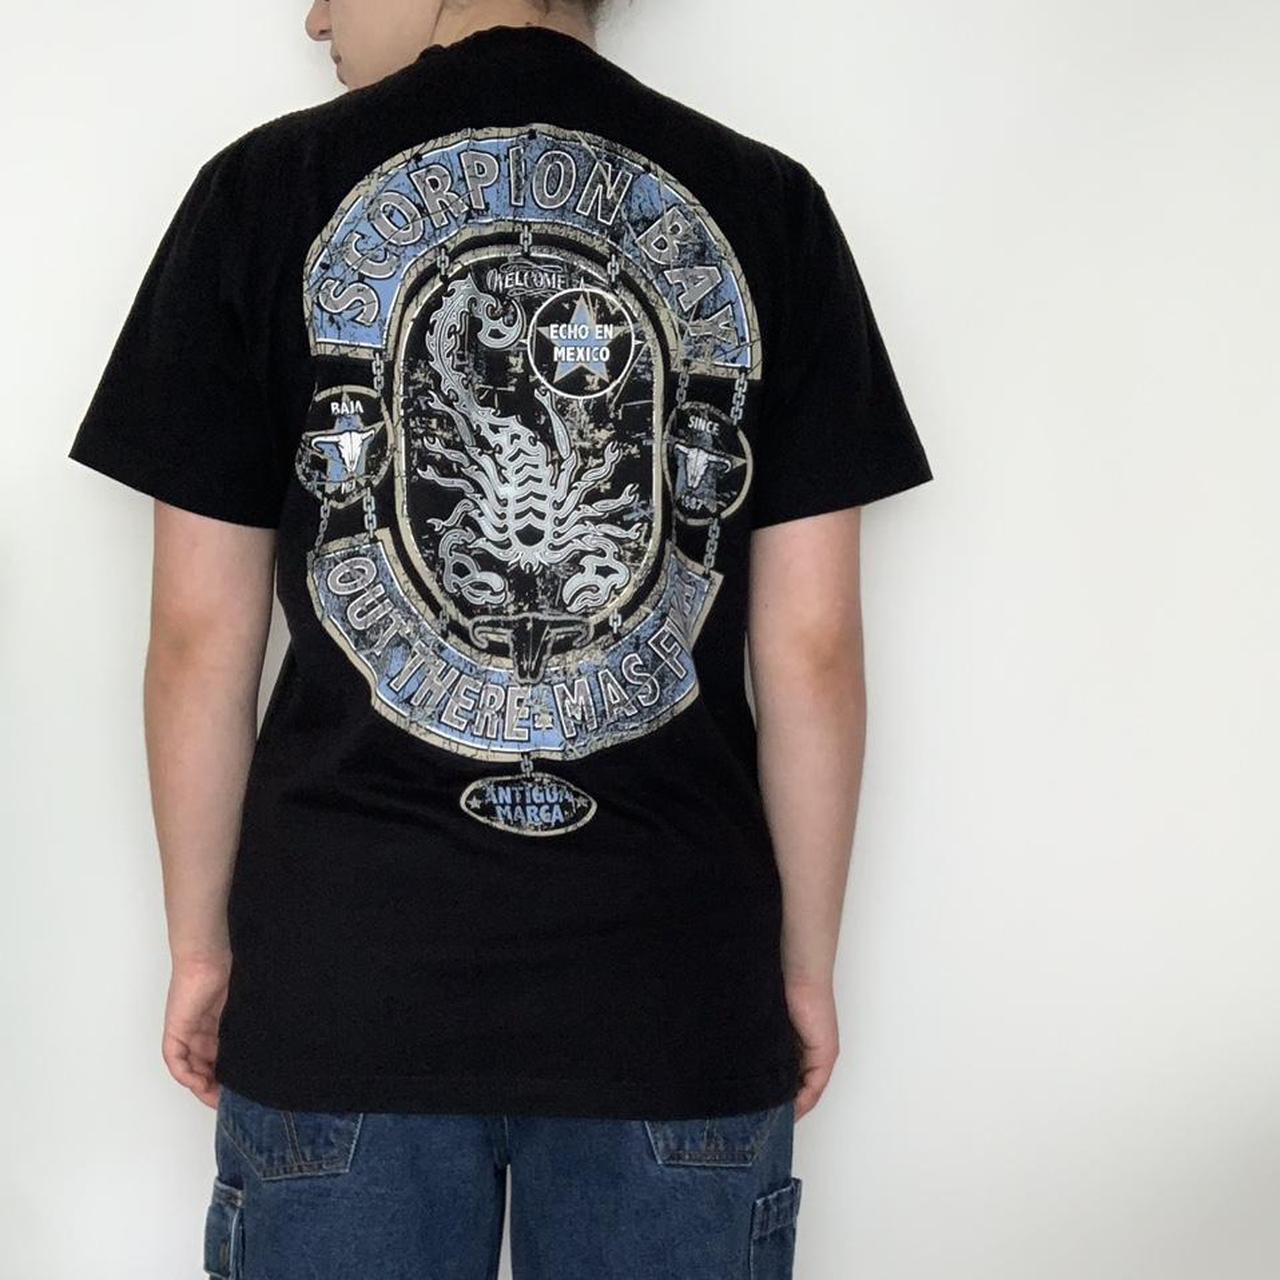 Vintage 90s Scorpion Bay black/blue graphic t-shirt